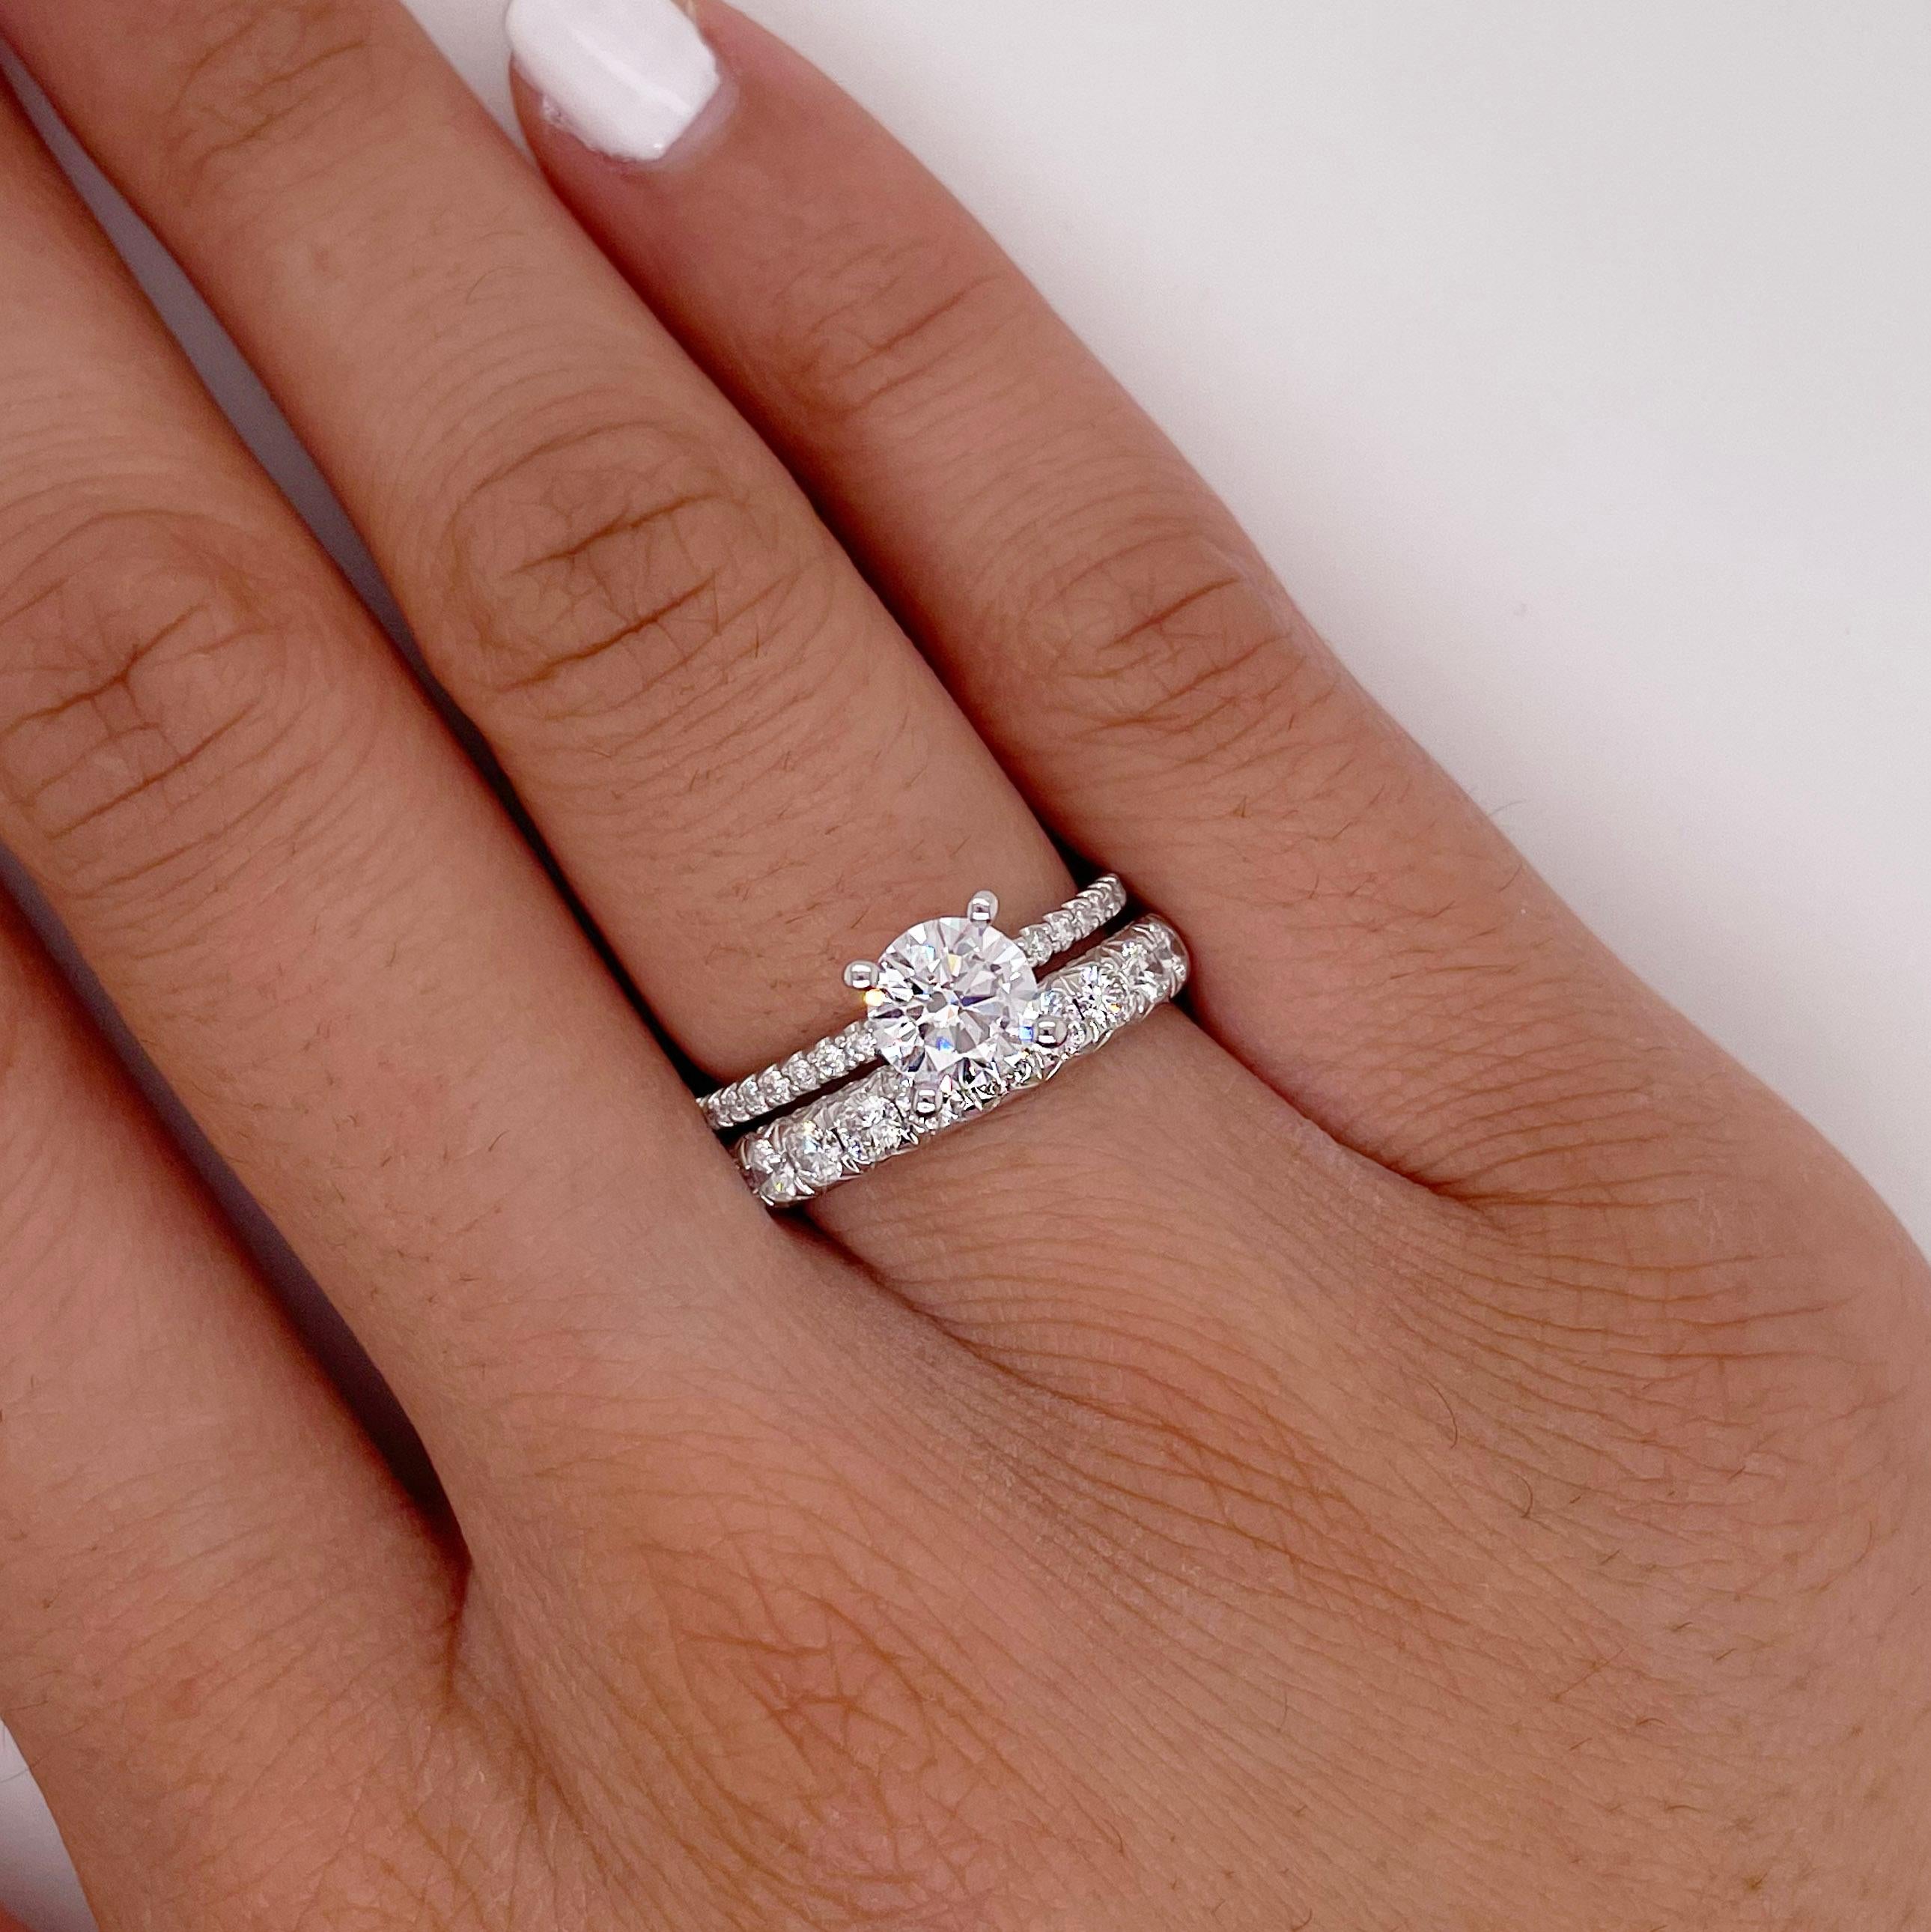 For Sale:  Diamond Band Ring, White Gold, Stunning .93 Carat Half Band 4